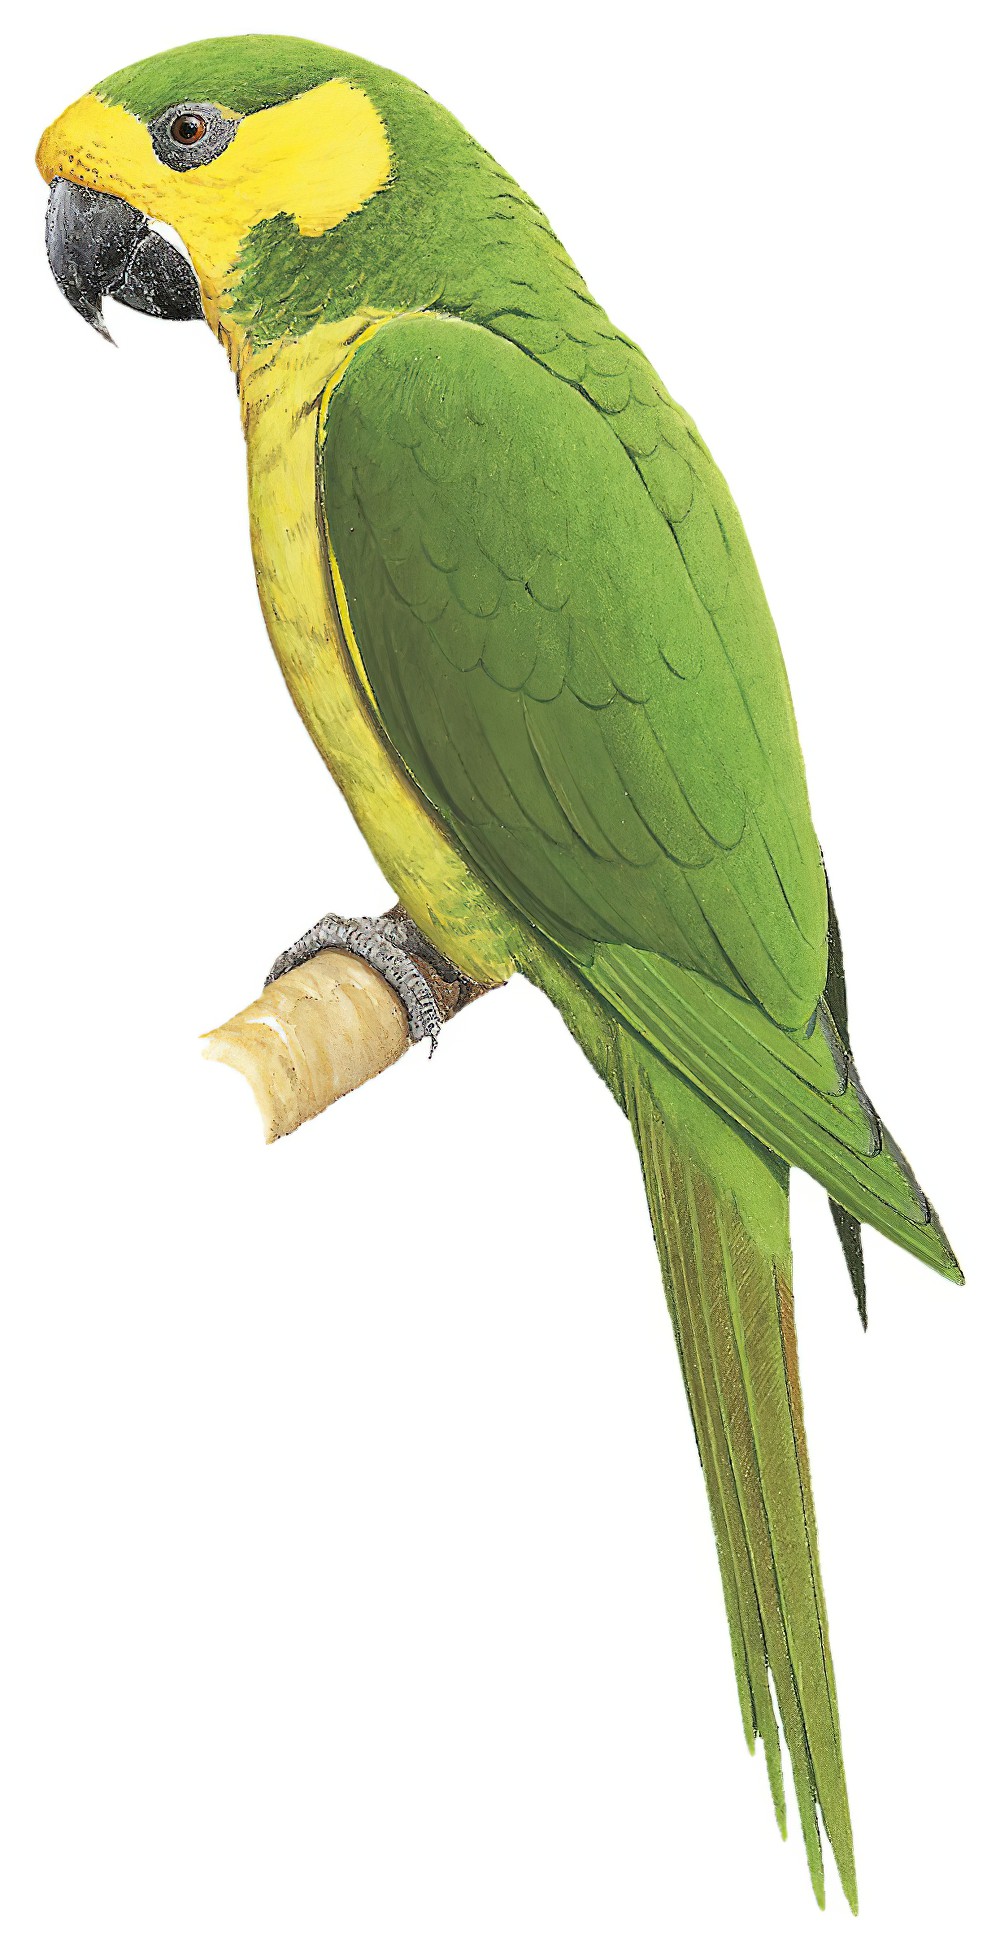 Yellow-eared Parrot / Ognorhynchus icterotis